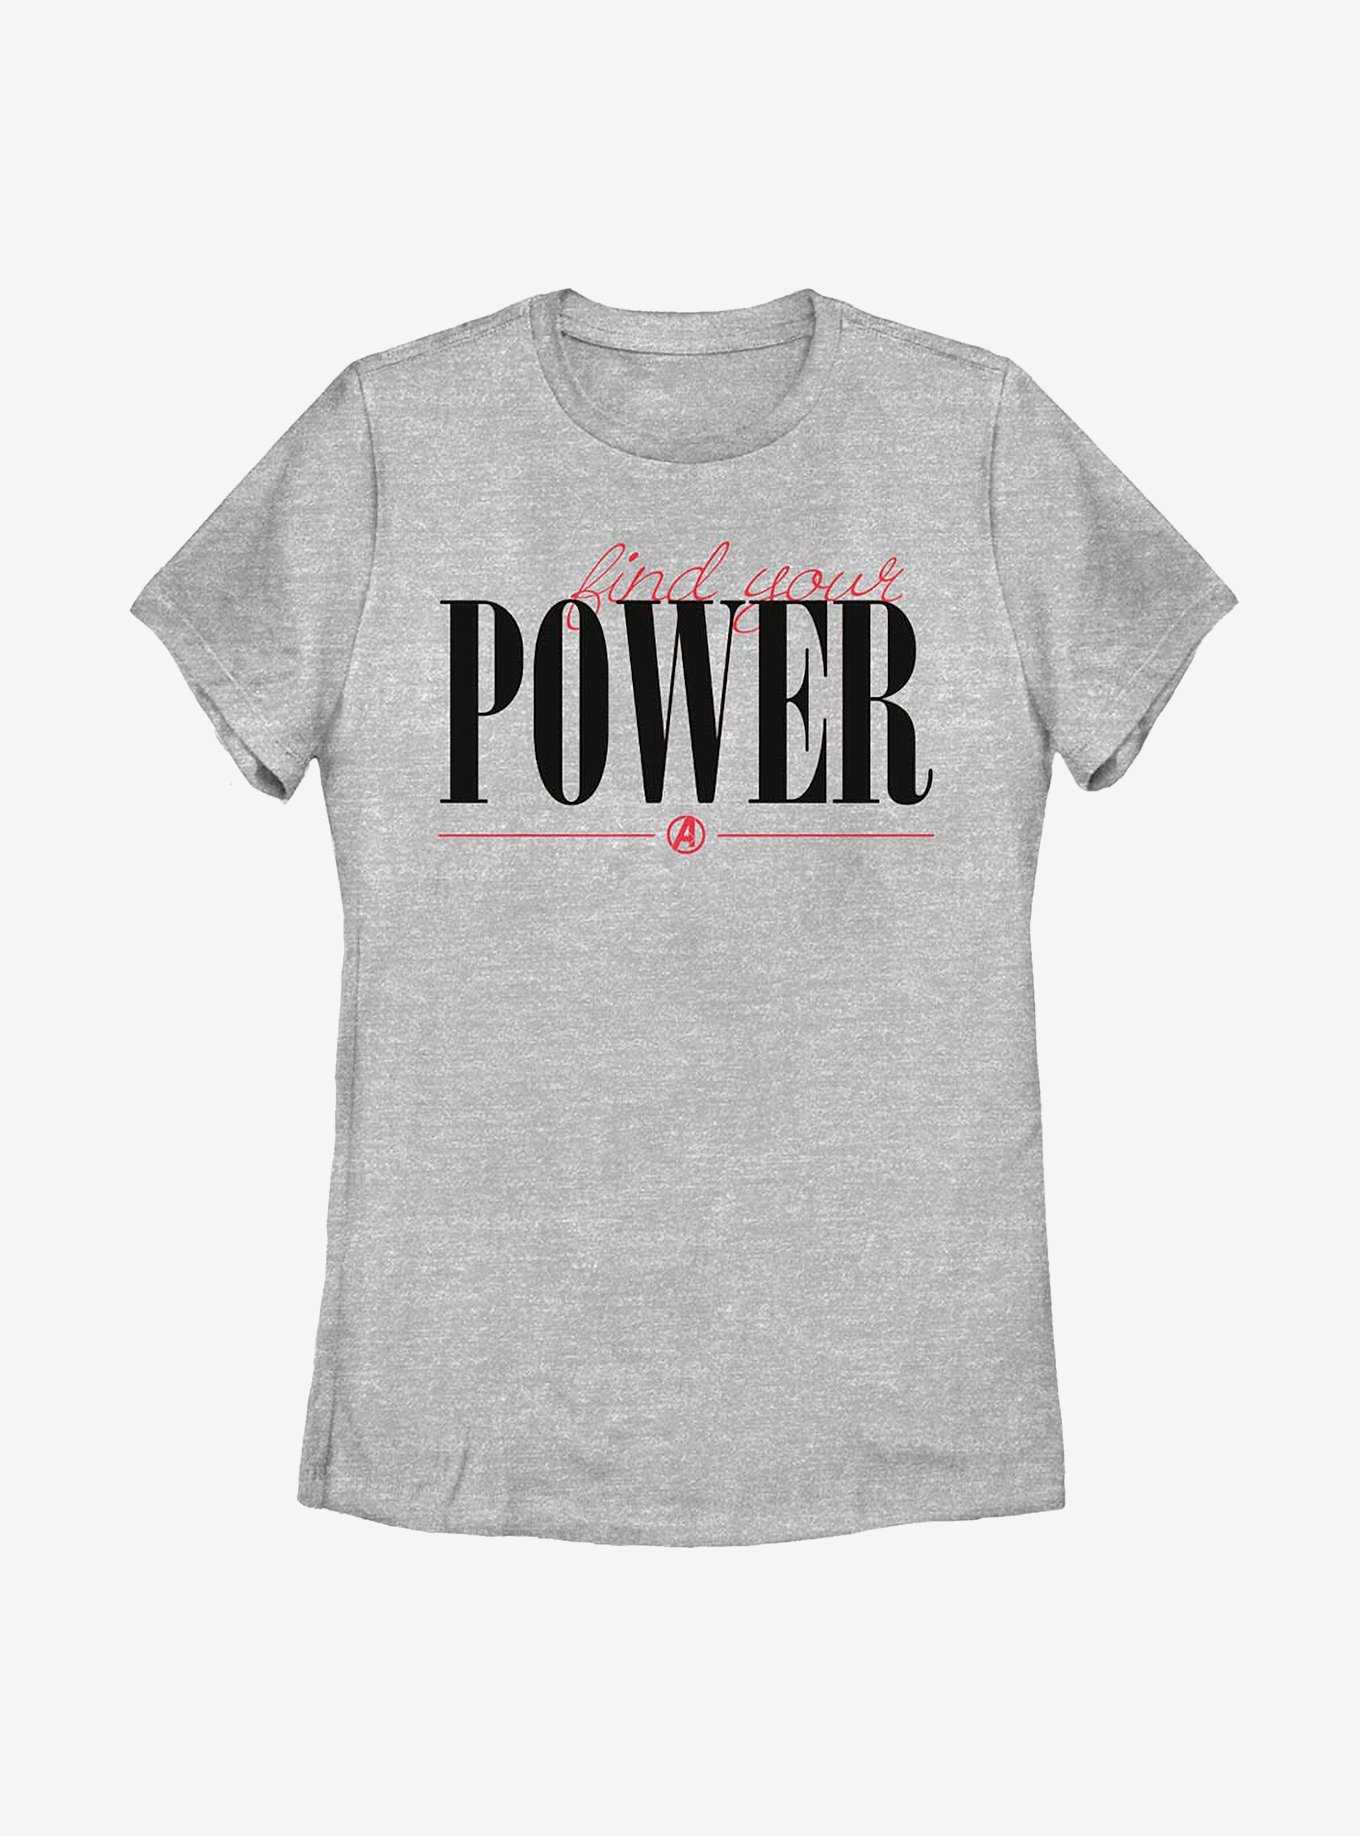 Marvel Avengers Power Script Womens T-Shirt, , hi-res